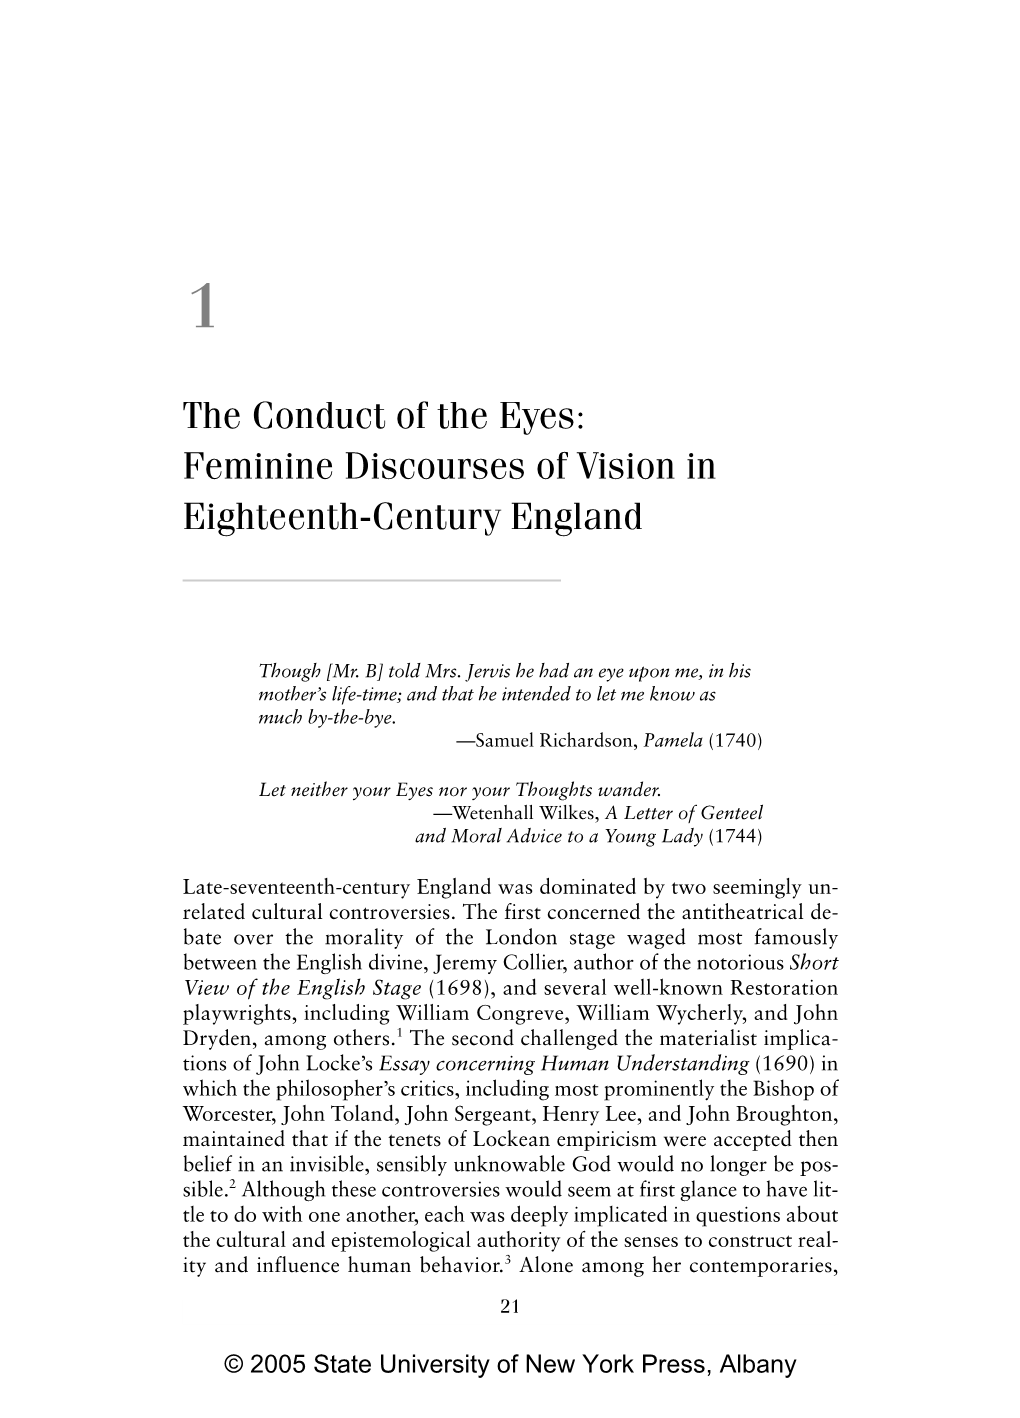 Feminine Discourses of Vision in Eighteenth-Century England